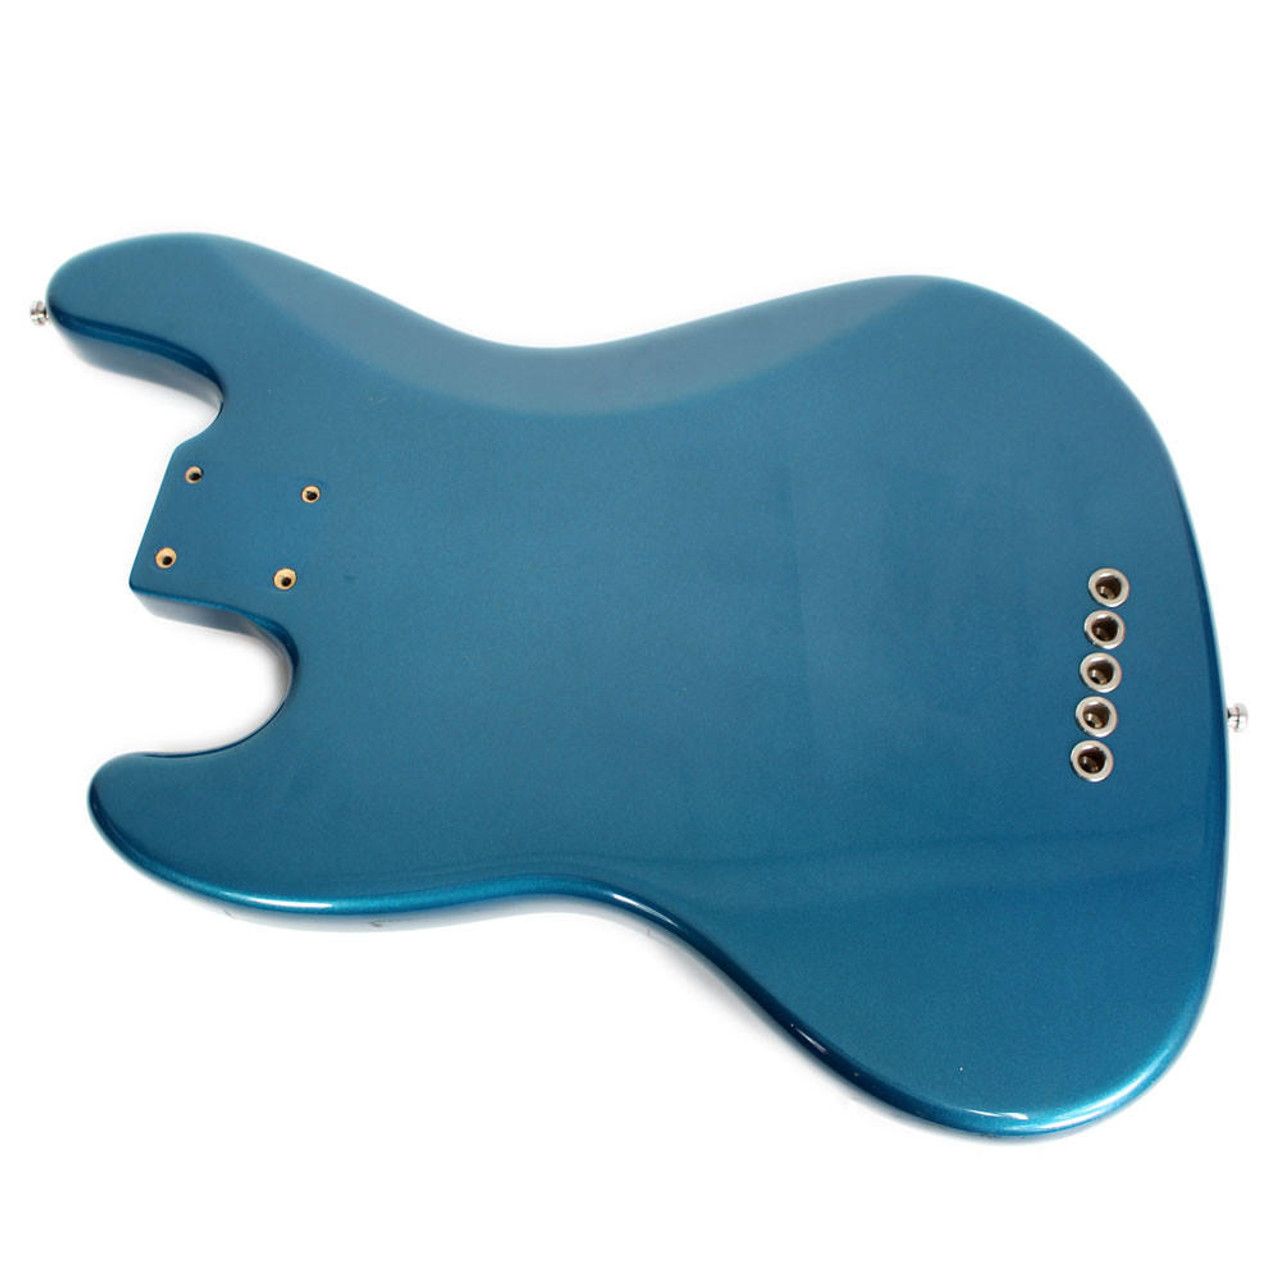 2000 Fender USA Jazz Bass Body Loaded Turquoise